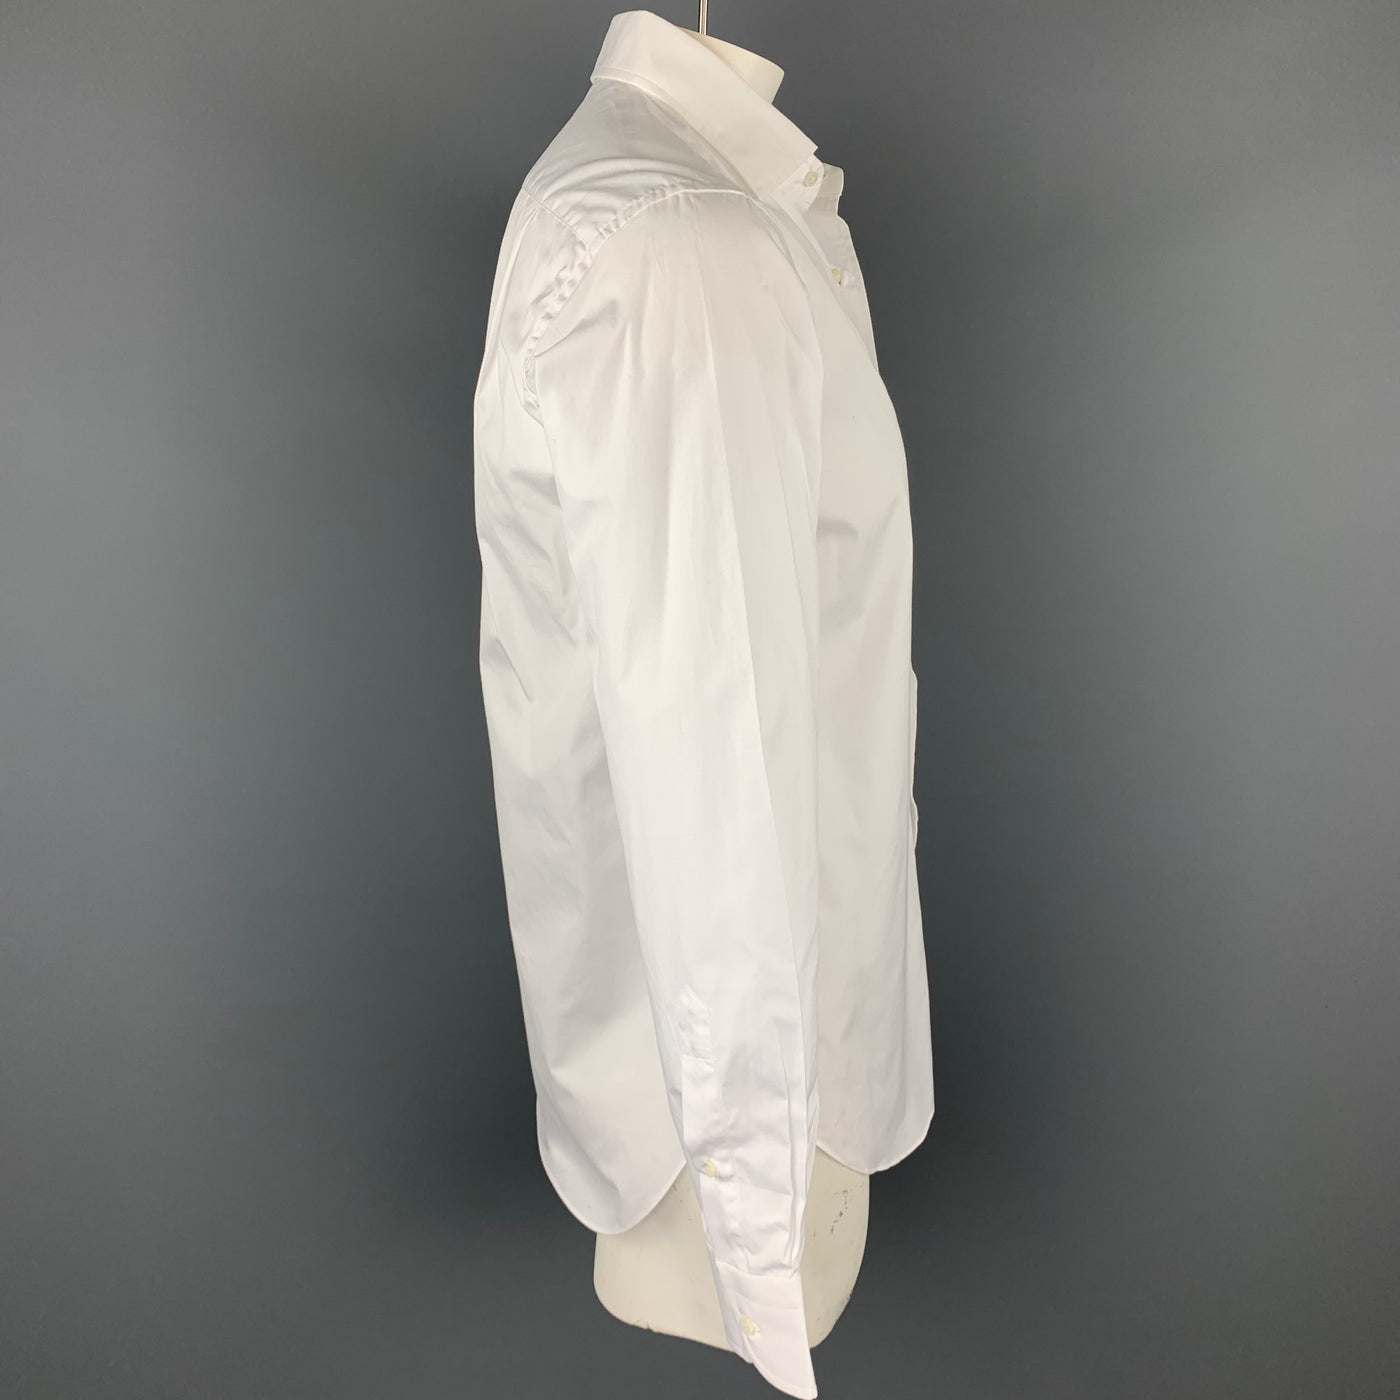 LORO PIANA Size L White Cotton Button Up Long Sleeve Shirt